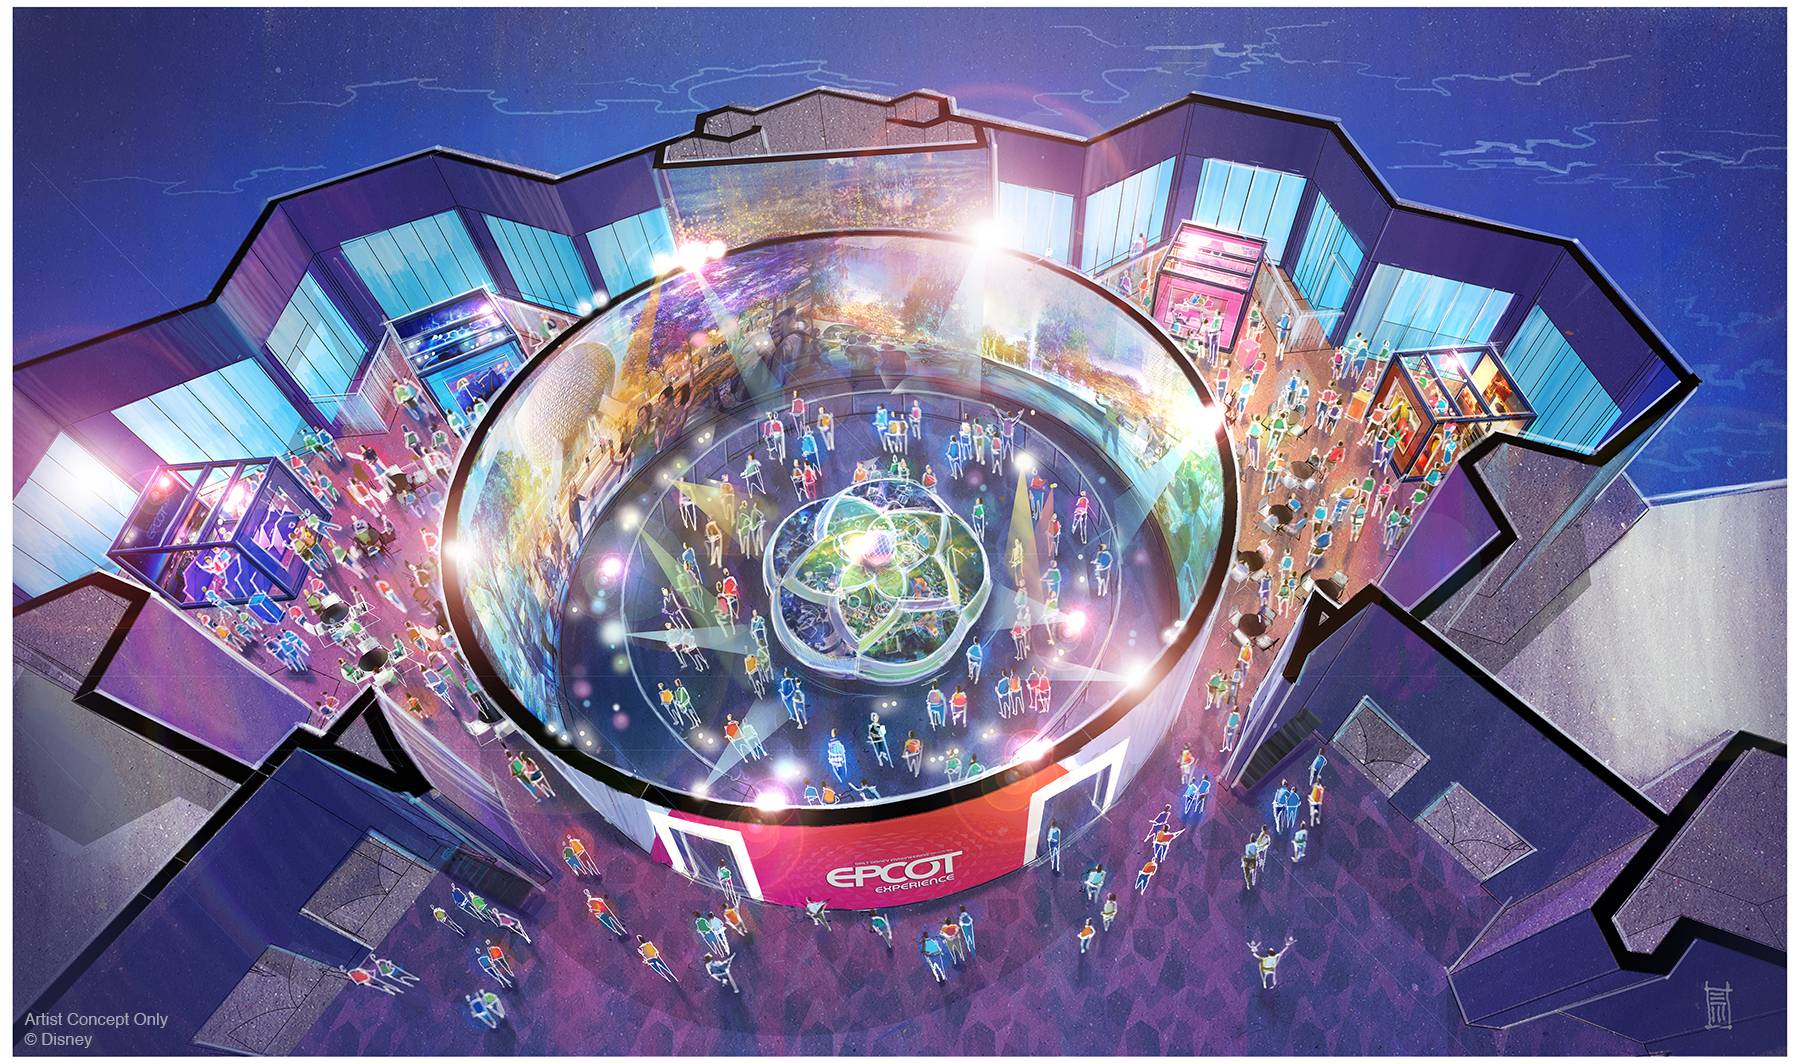 Walt Disney Imagineering presents the Epcot Experience concept art